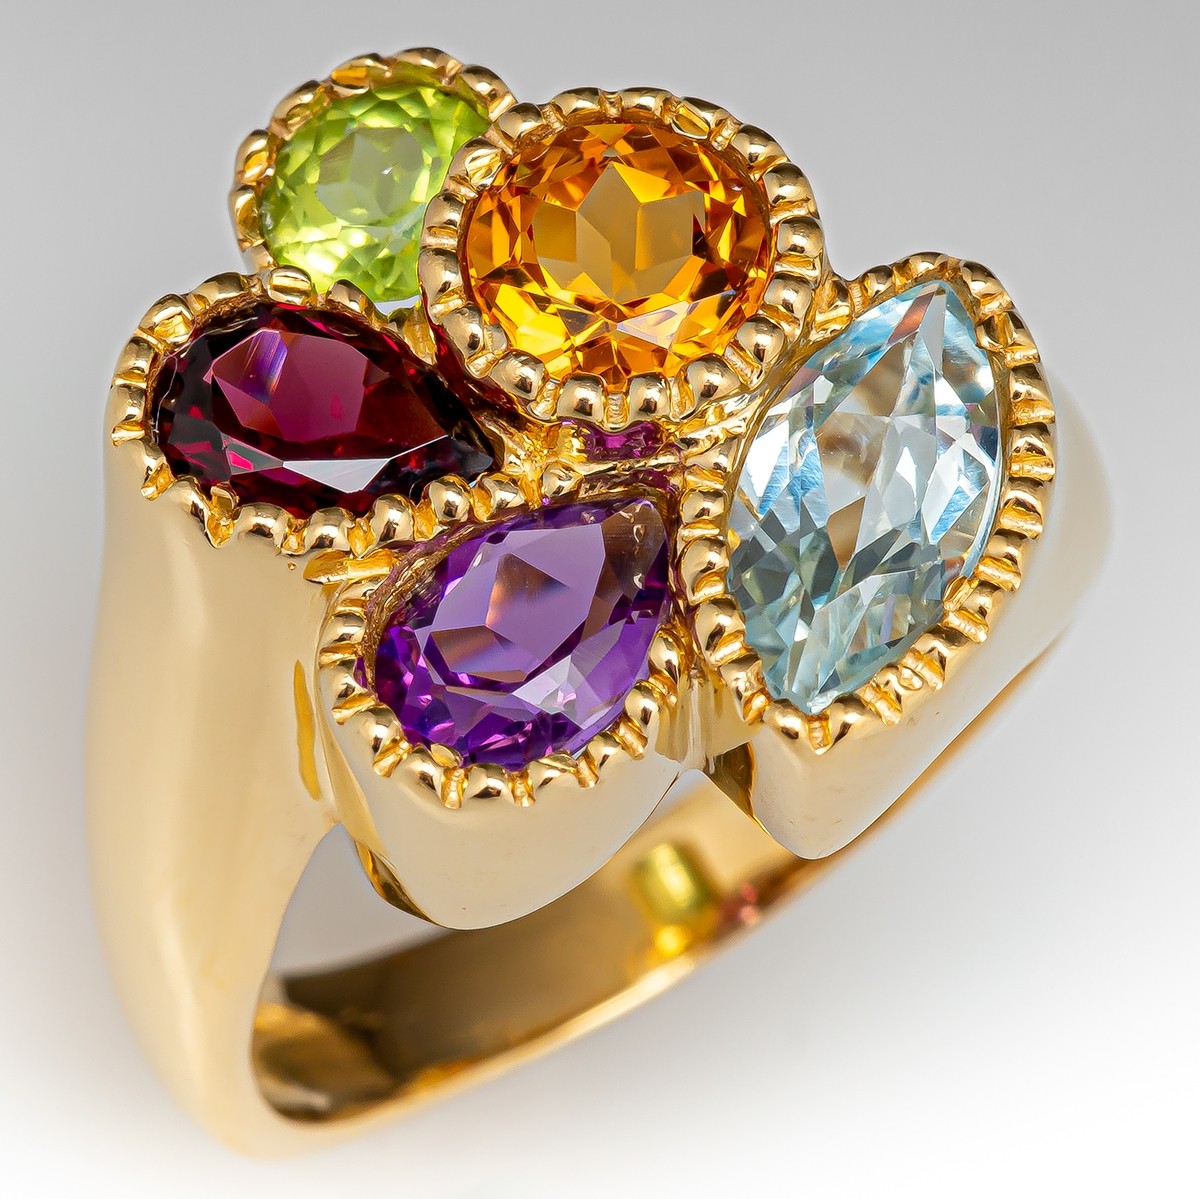 Buy Impon Blue Stone Ring Design Five Metal Rings Buy Online